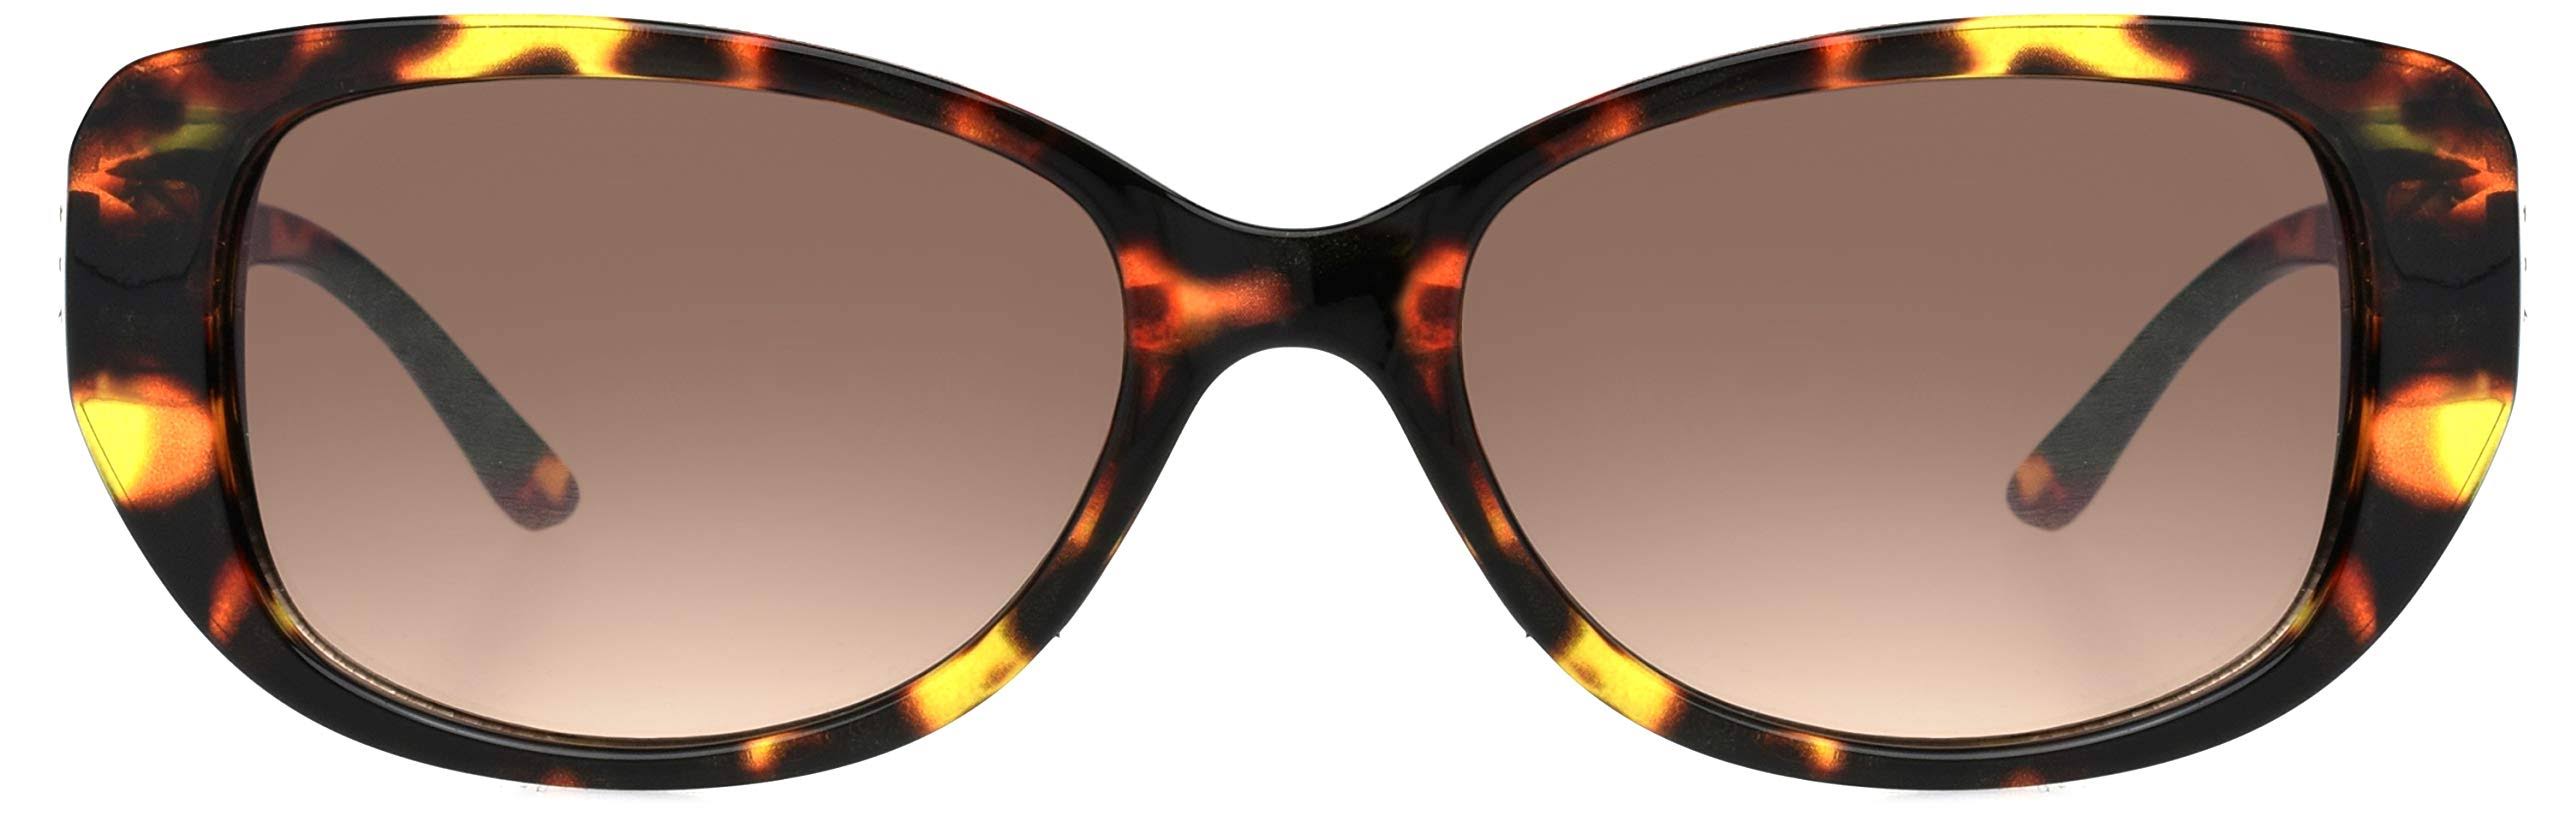 Foster Grant Women's Tort/Gold Maren Sunglasses (i110)